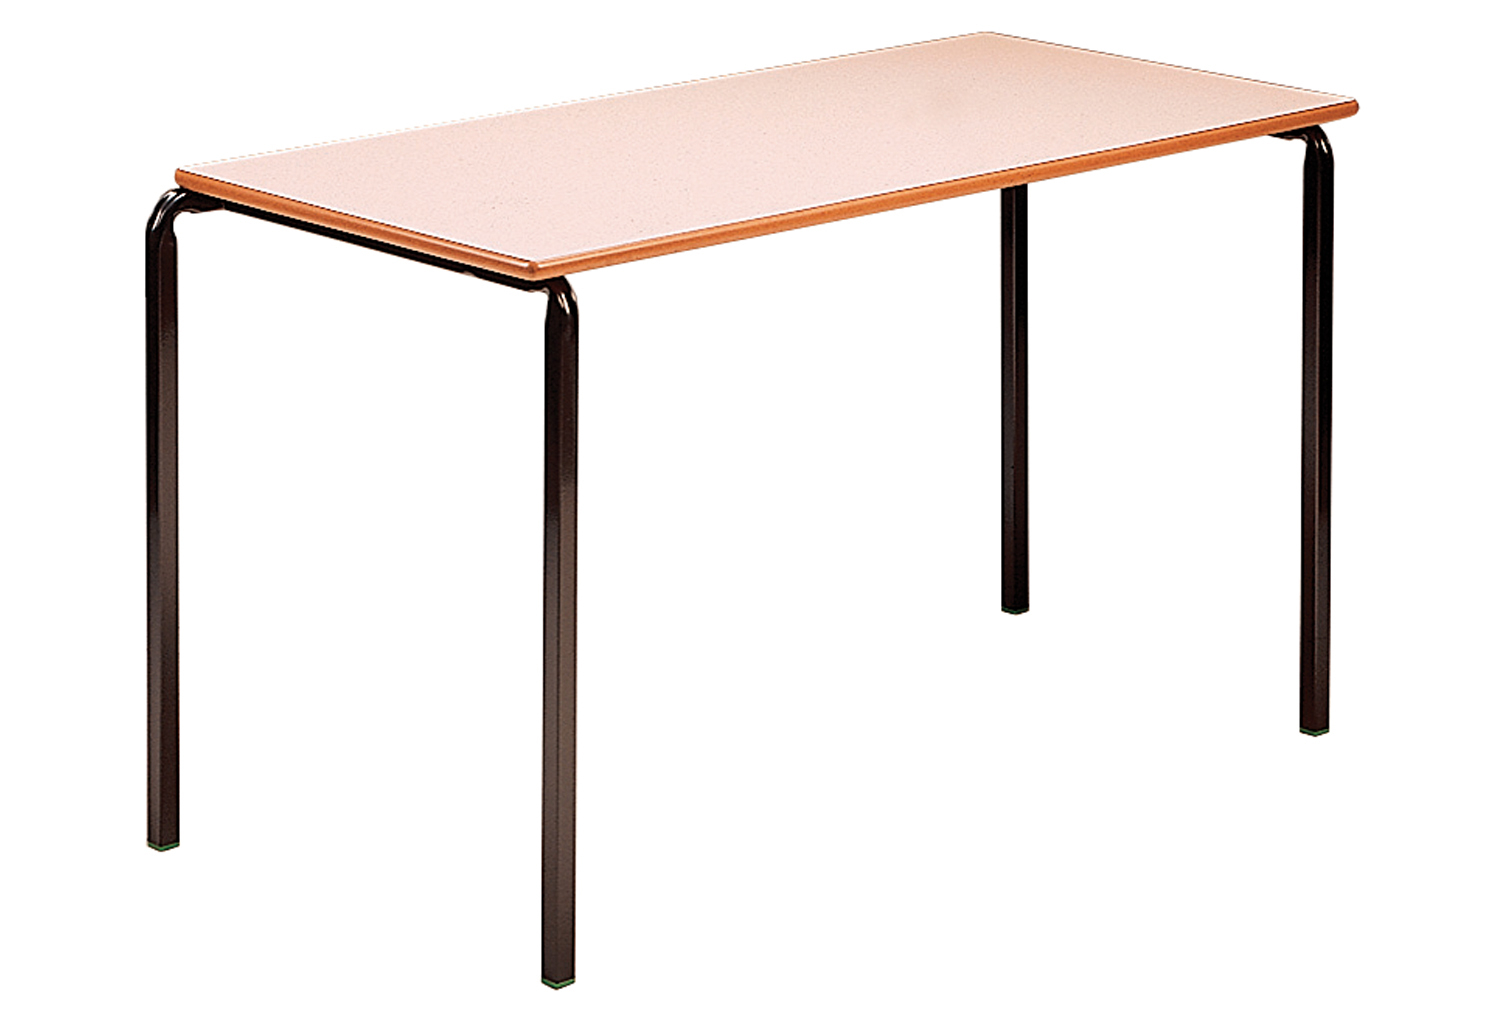 Qty 4 - Rectangular Crush Bent Classroom Tables 11-14 Years, 120wx60dx71h (cm), Charcoal Frame, Beech Top, MDF Beech Edge